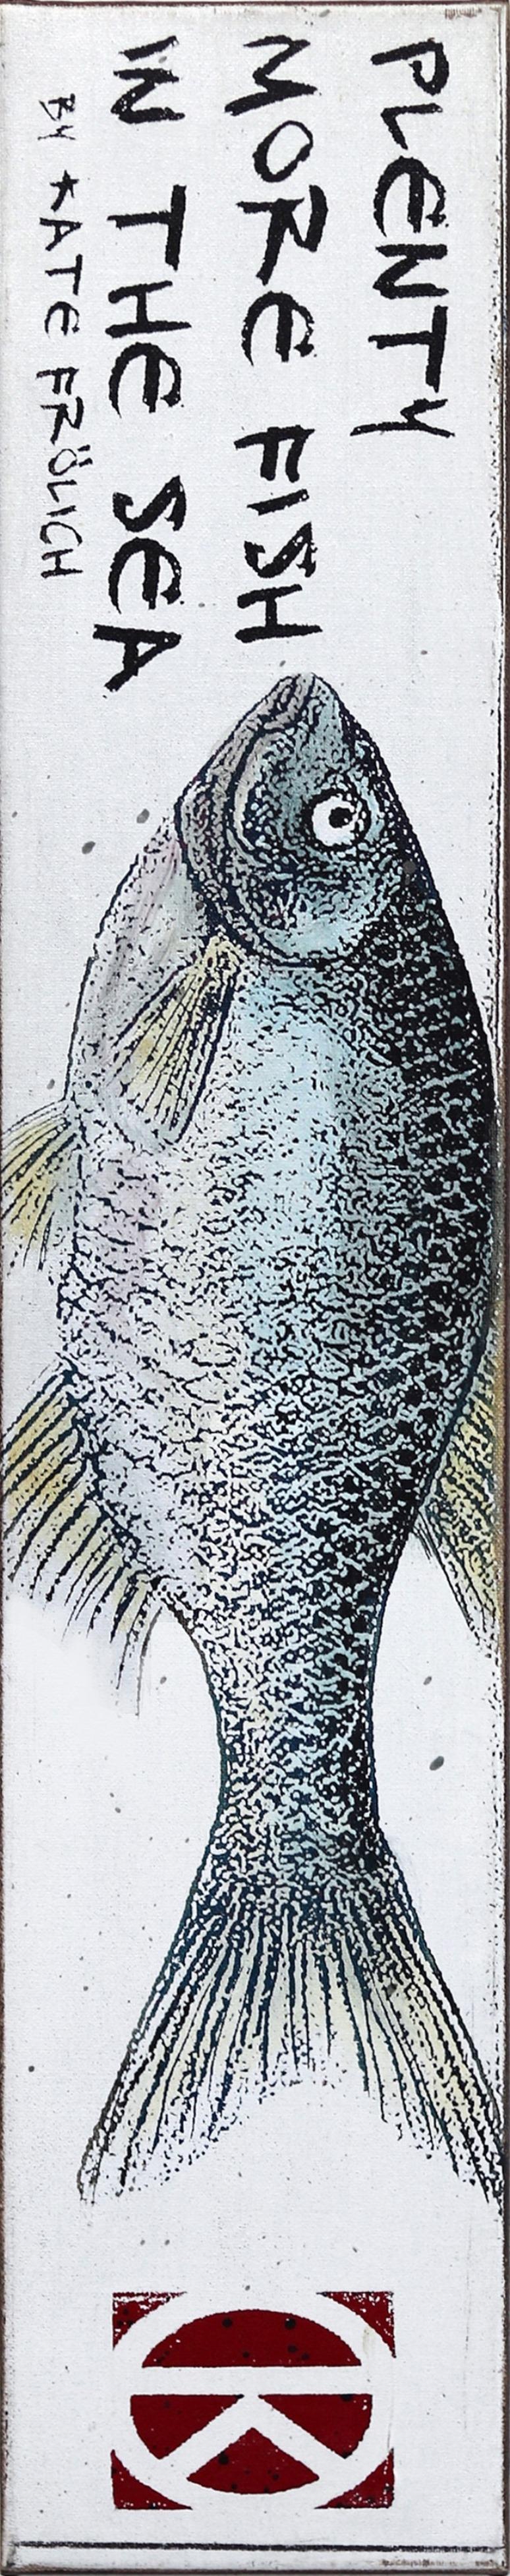 Still-Life Painting Carl Smith - Plenty More Fish - Nature morte aquatique originale monochrome sur toile